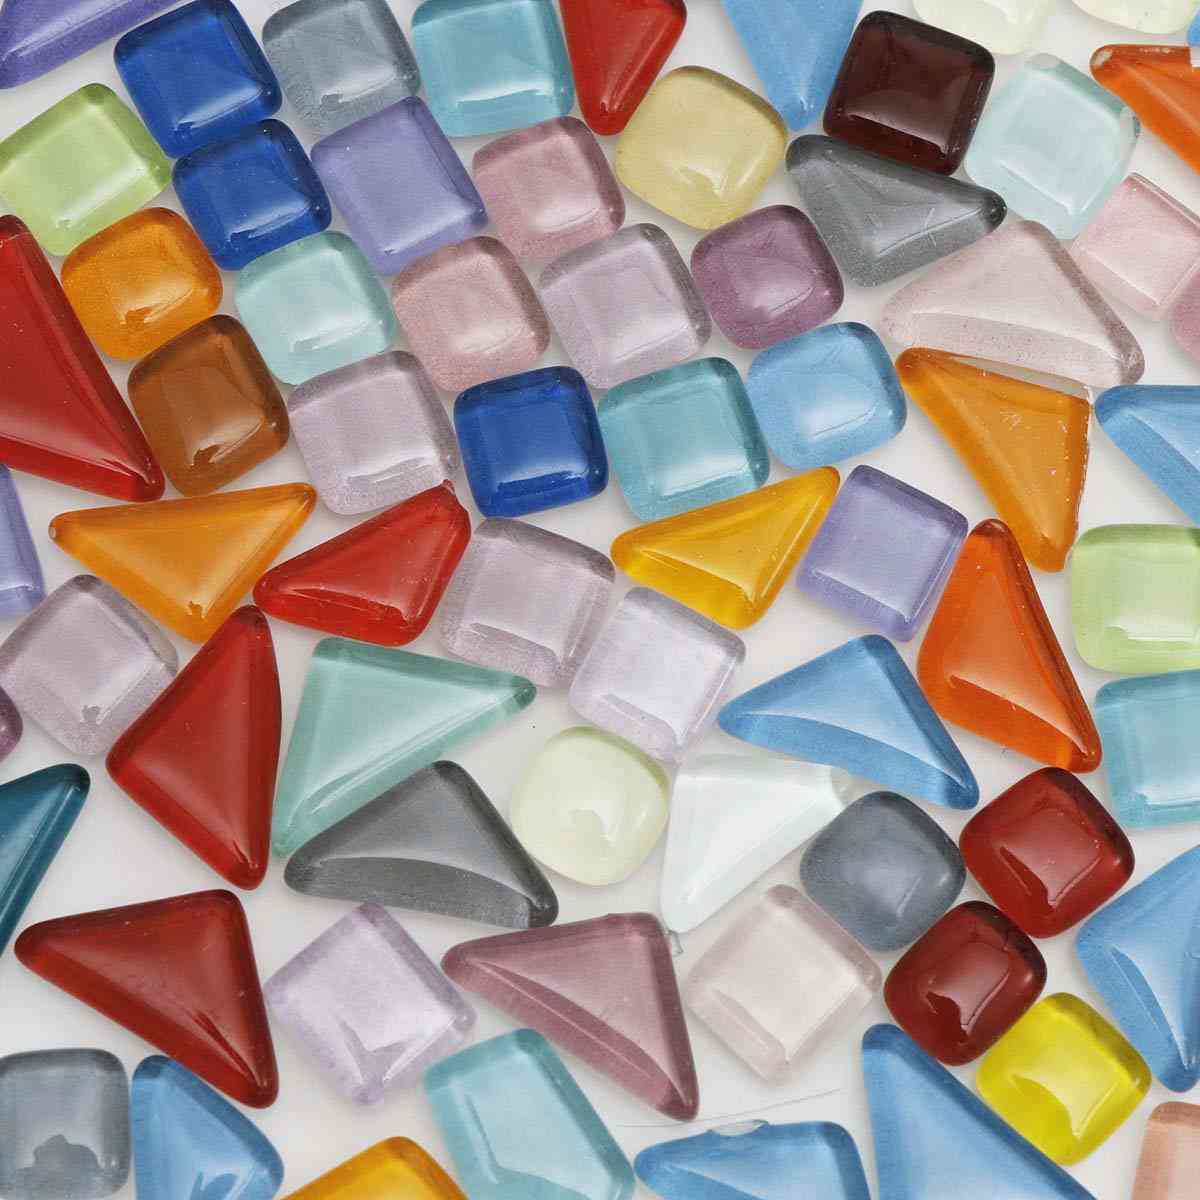 Figuras geométricas em mini ladrilhos de mosaico de cristal